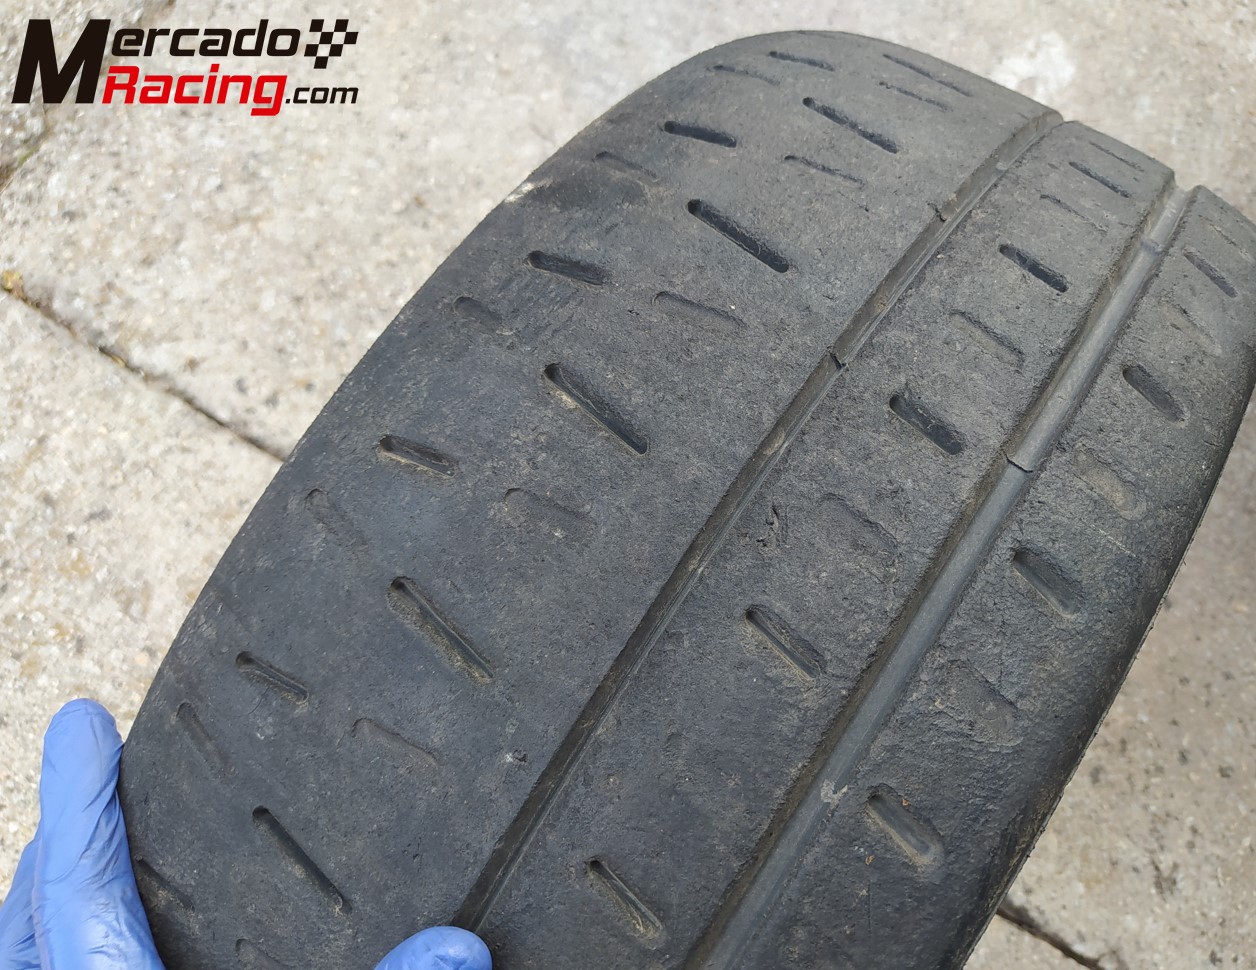 Neumáticos asfalto  pirelli 235/40r18 ra5